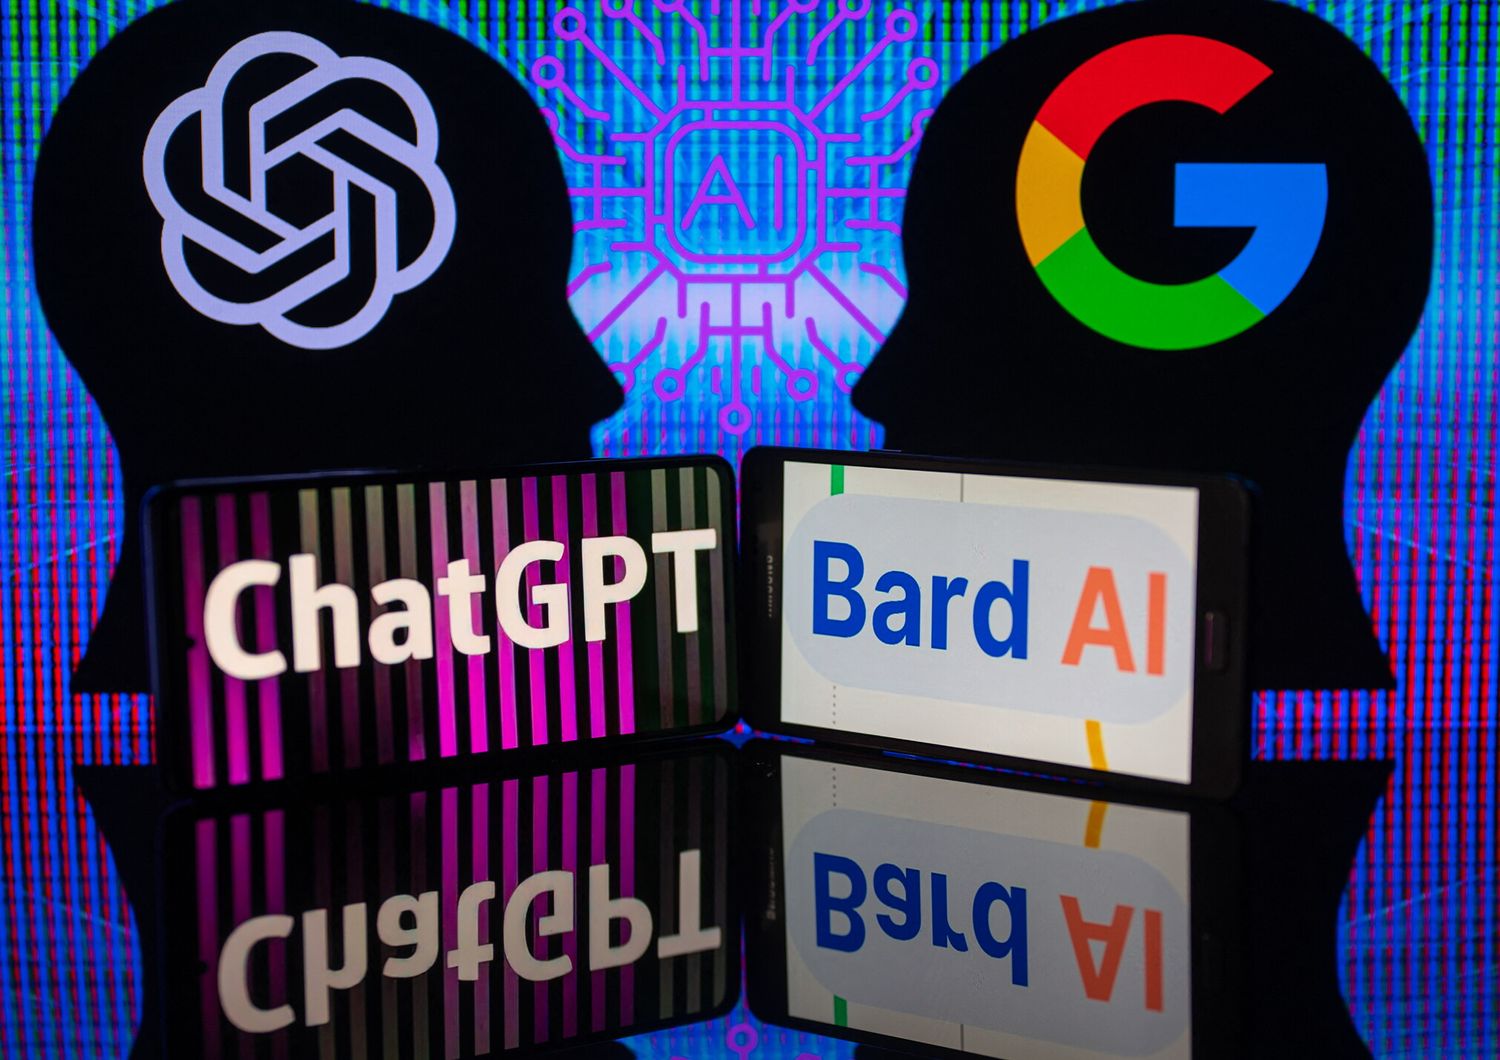 Bard, intelligenza artificiale di Google